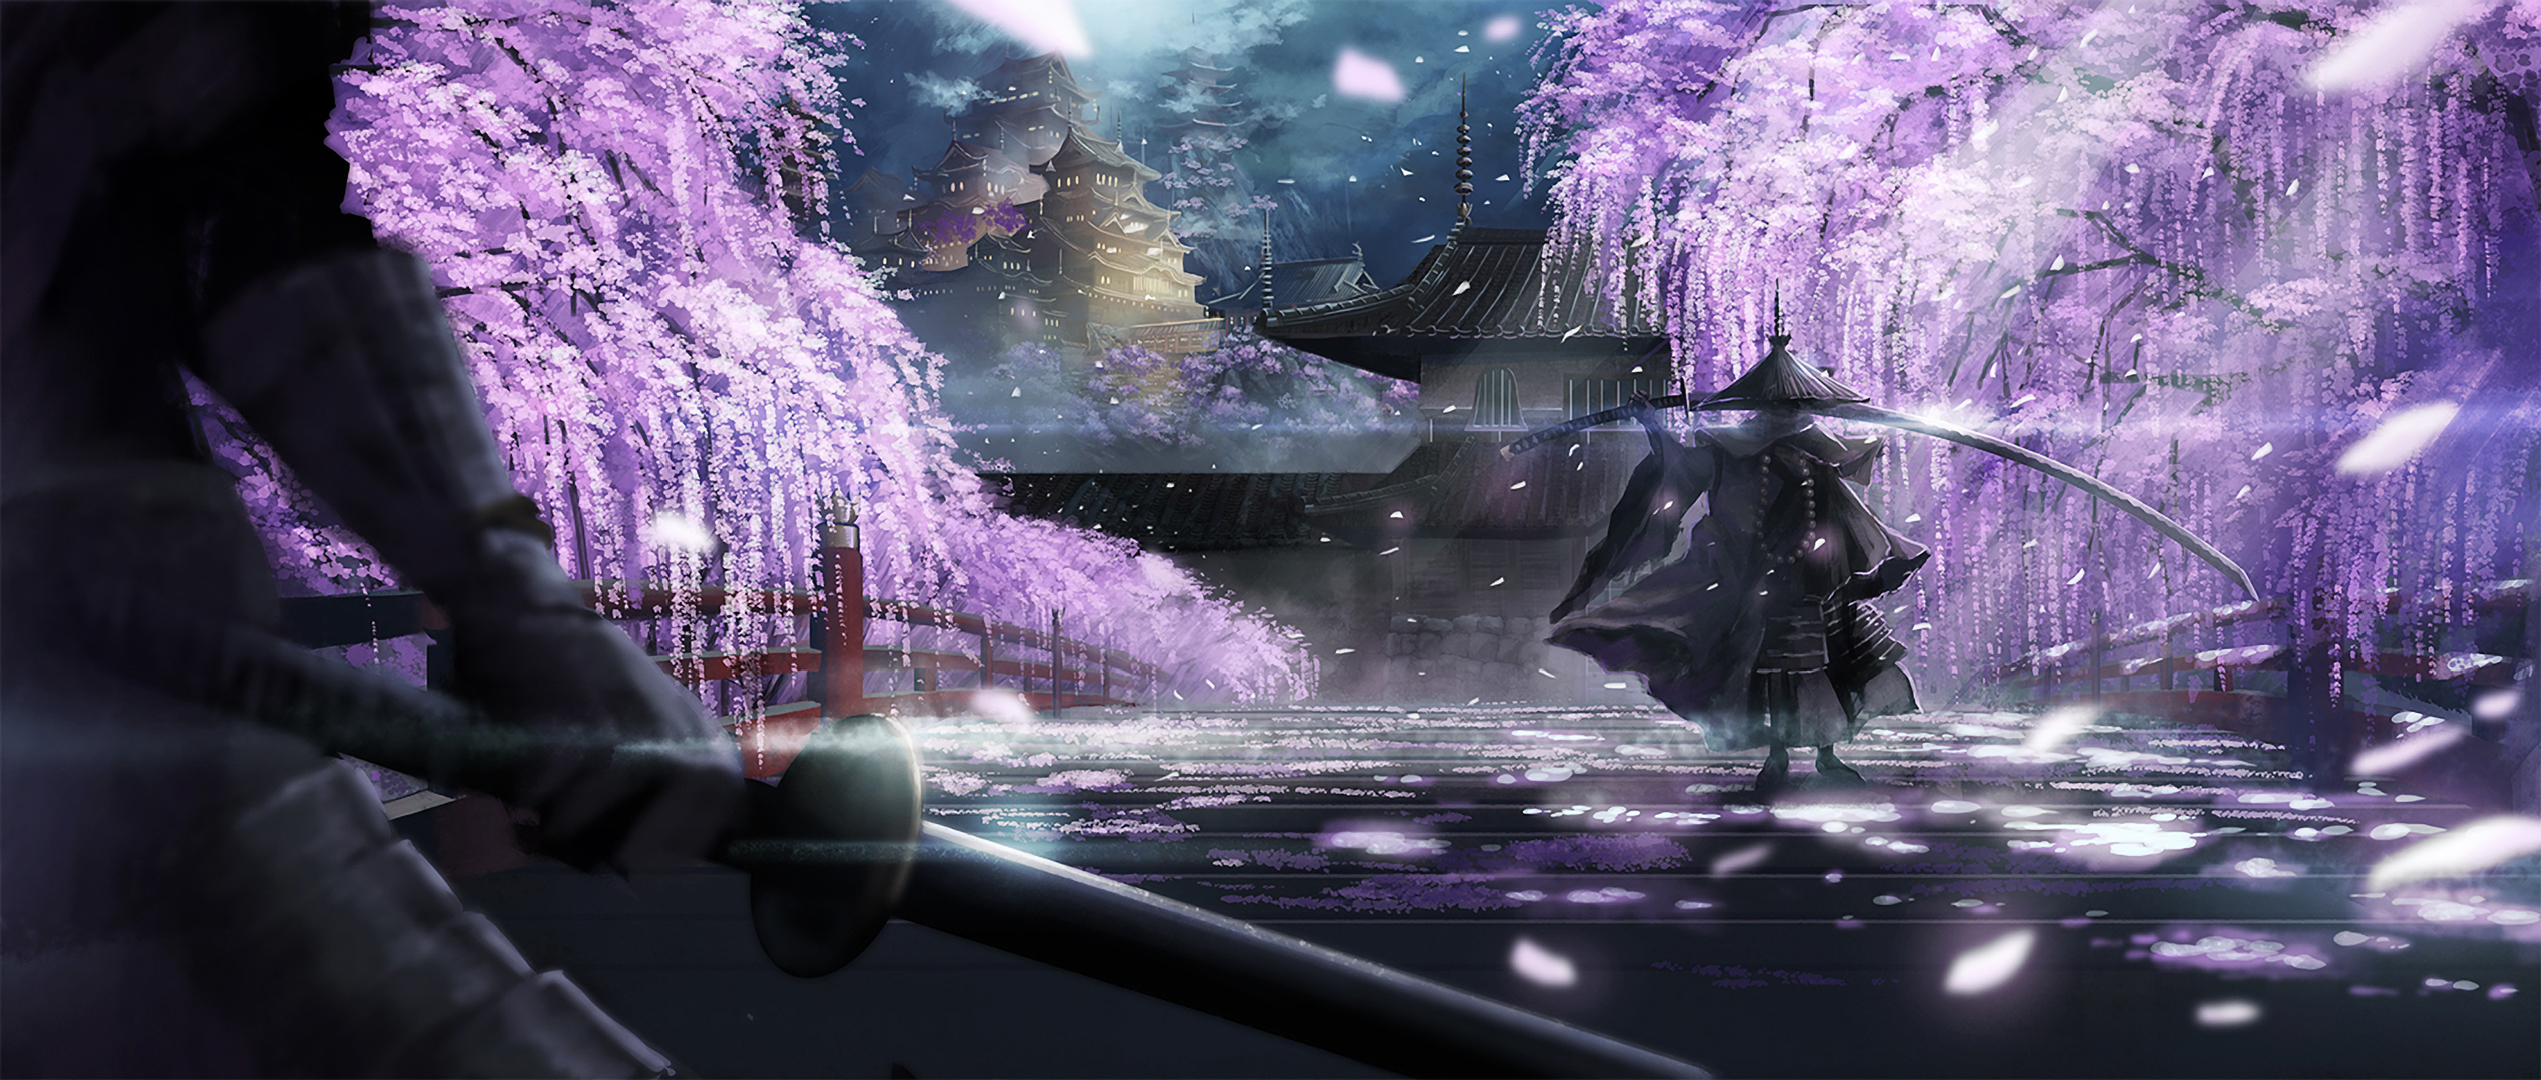 Fantaisie Samourai Fond d'écran HD | Image